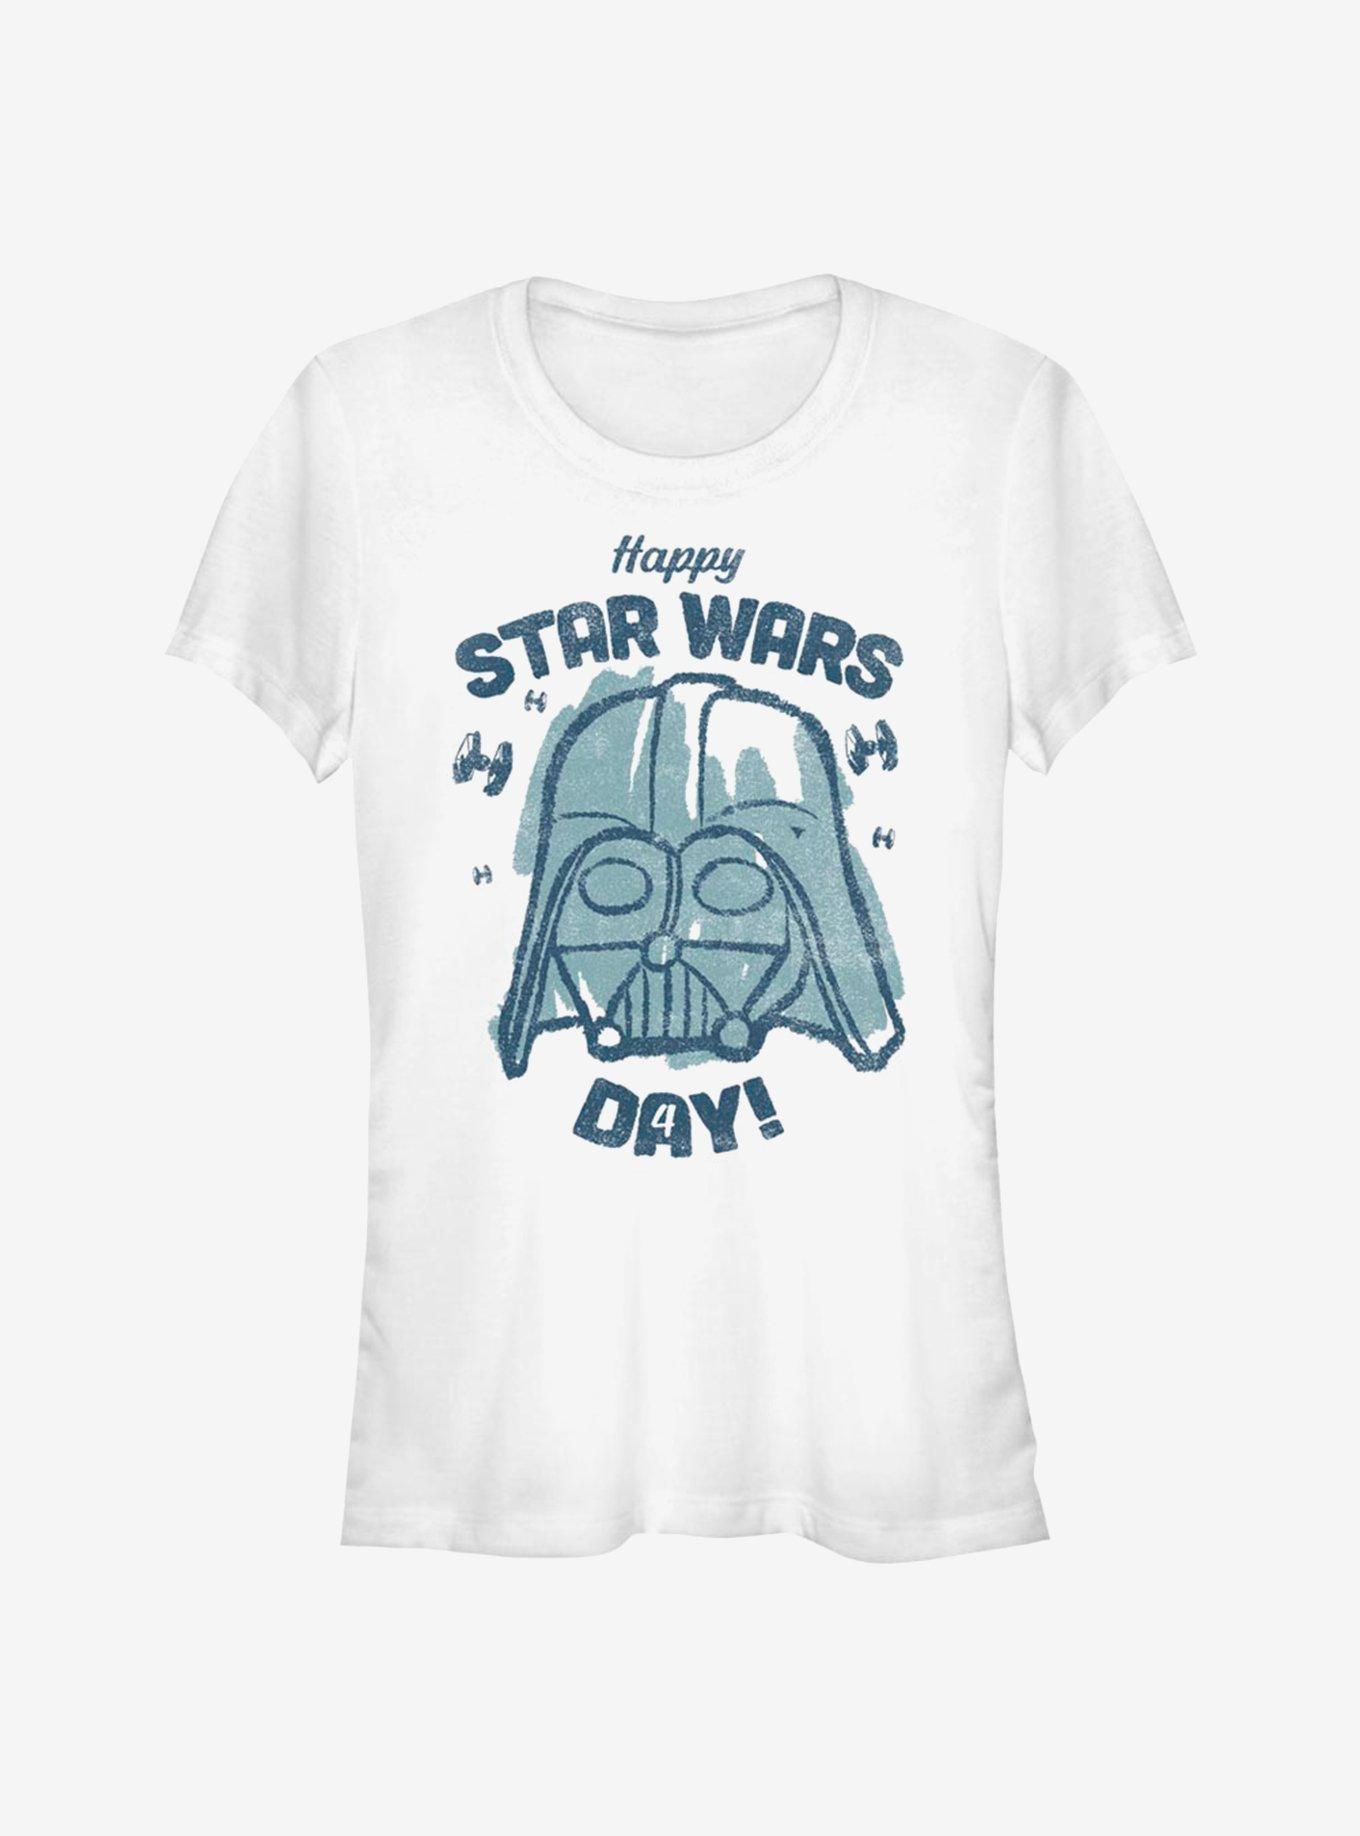 Star Wars Happy Day Girls T-Shirt